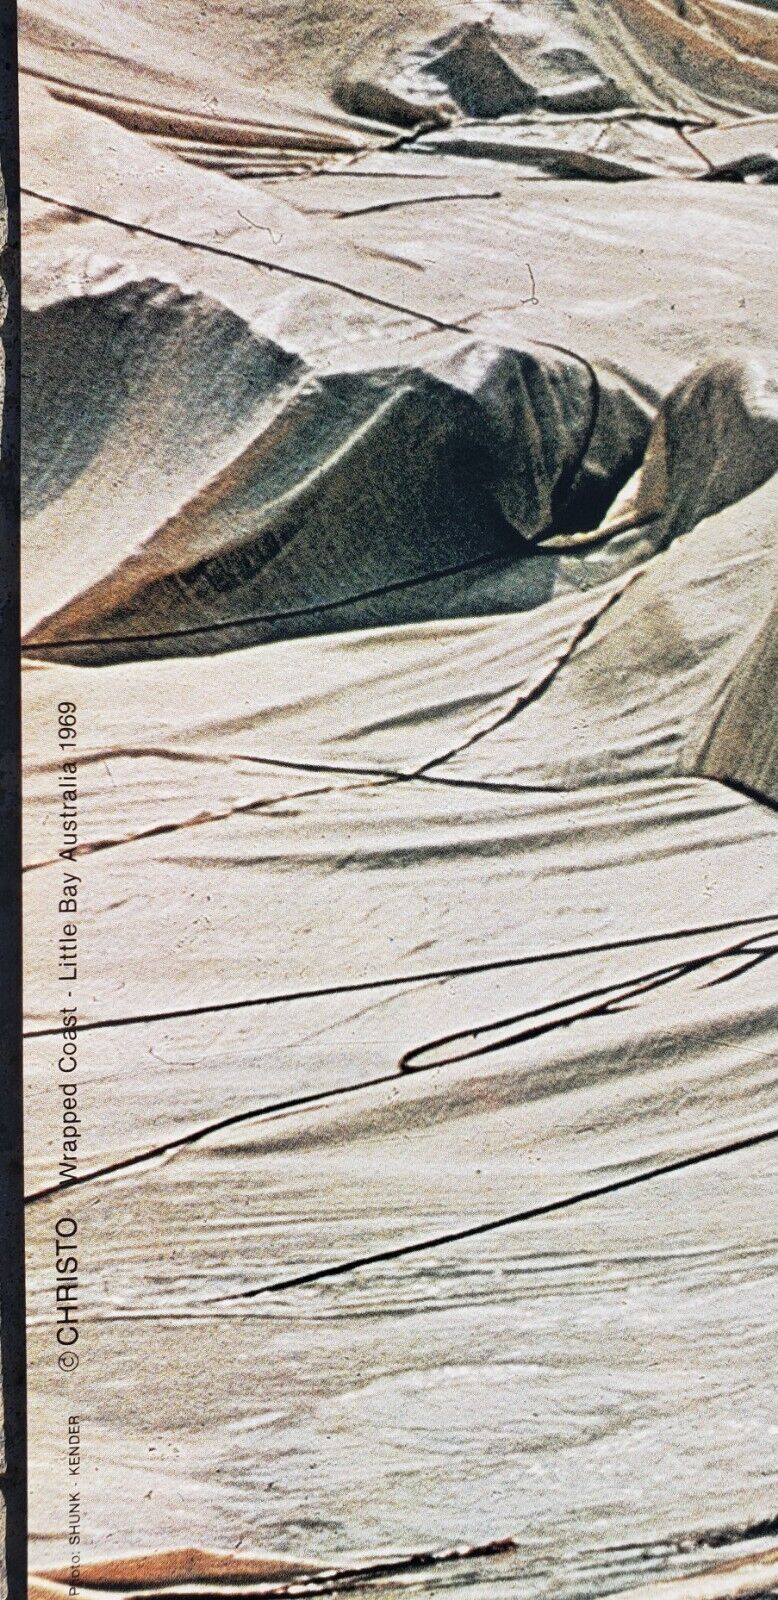 Christo et Jeanne-Claude Wrapped Coast - Little Bay Australia 1969